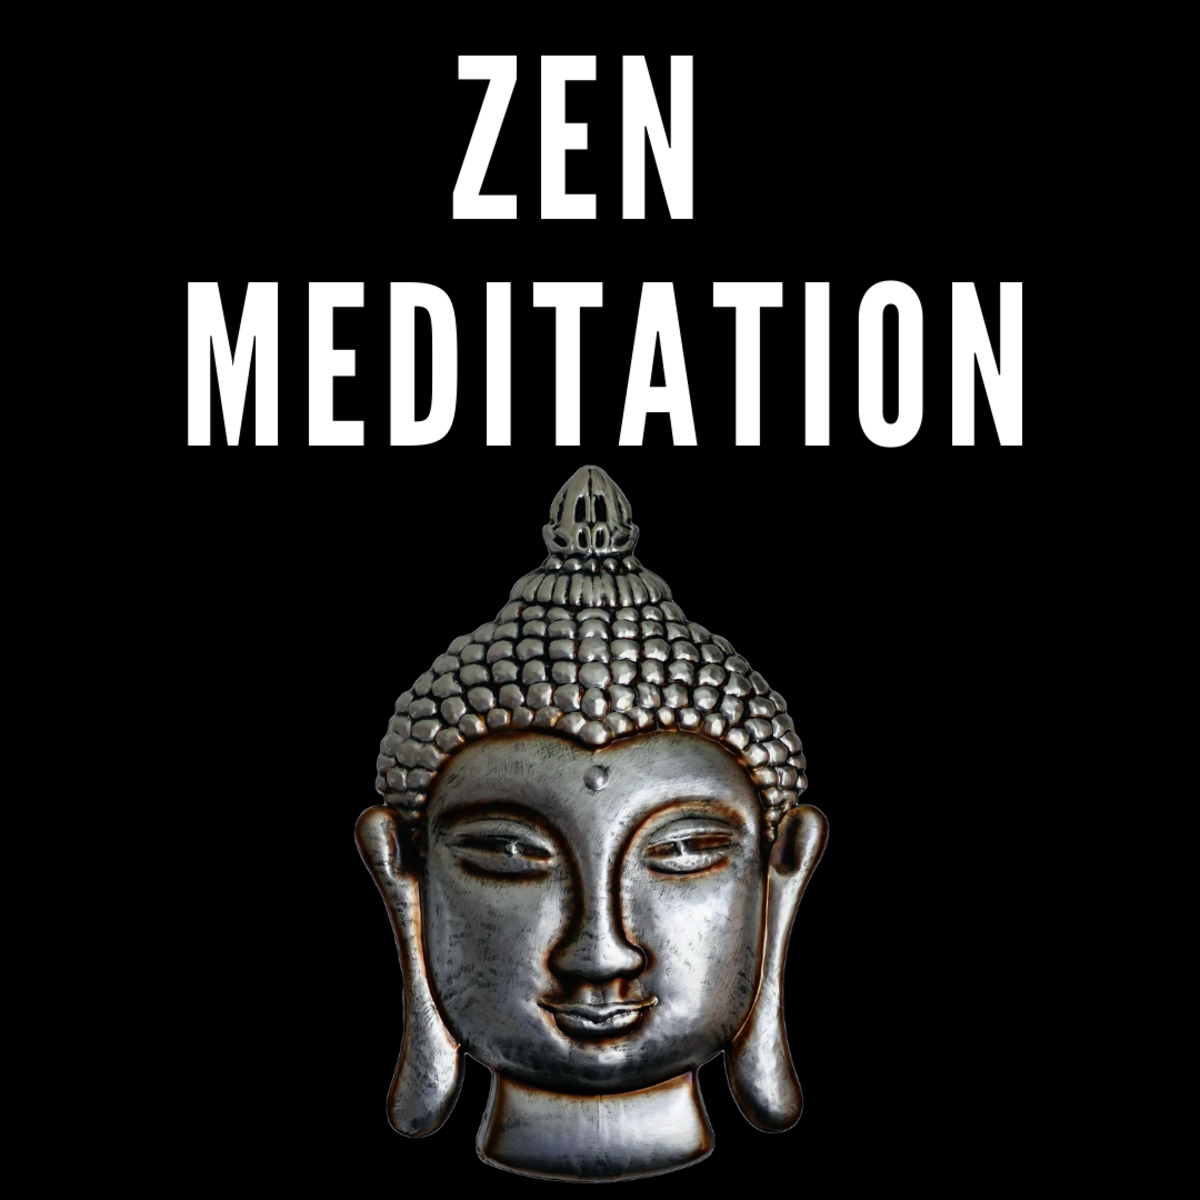 Zen Meditation - The Secret to Enlightenment